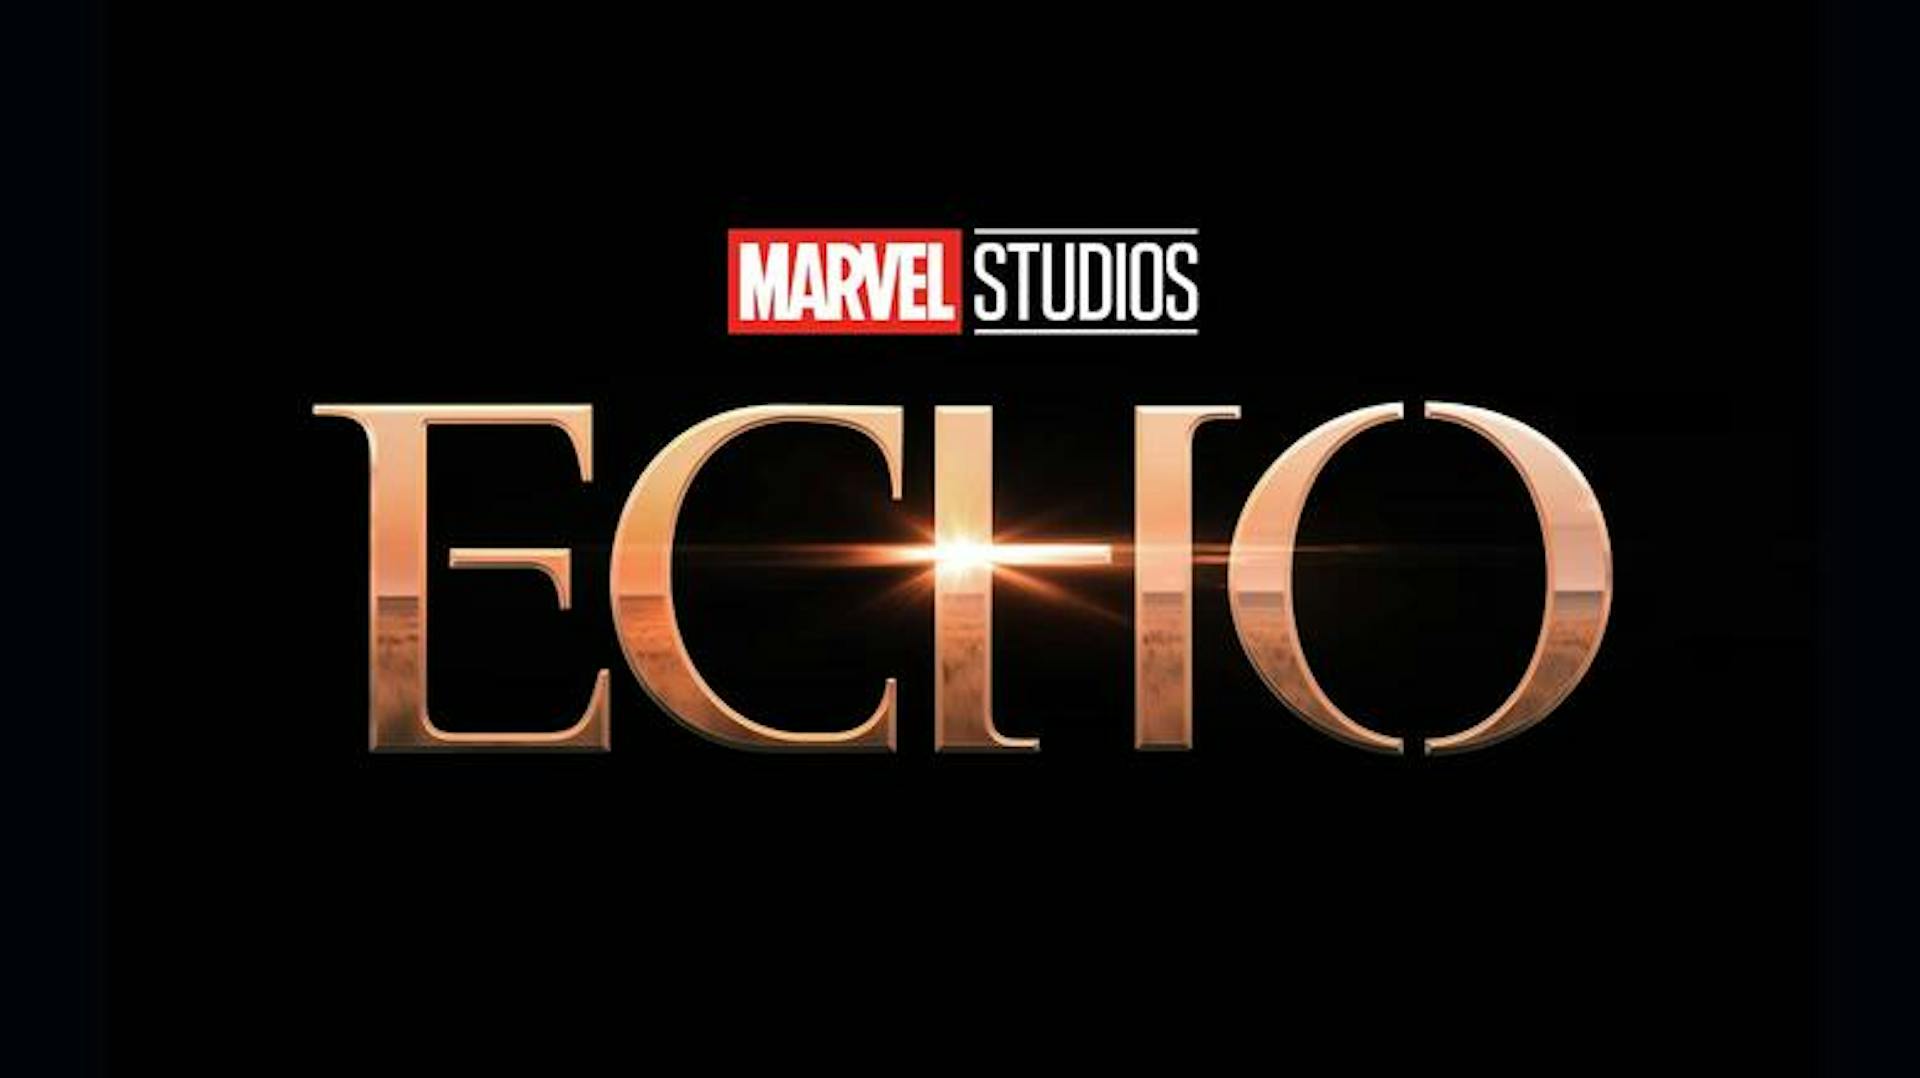 https://www.marvel.com/articles/tv-shows/sdcc-2022-marvel-studios-echo-release-date-announced